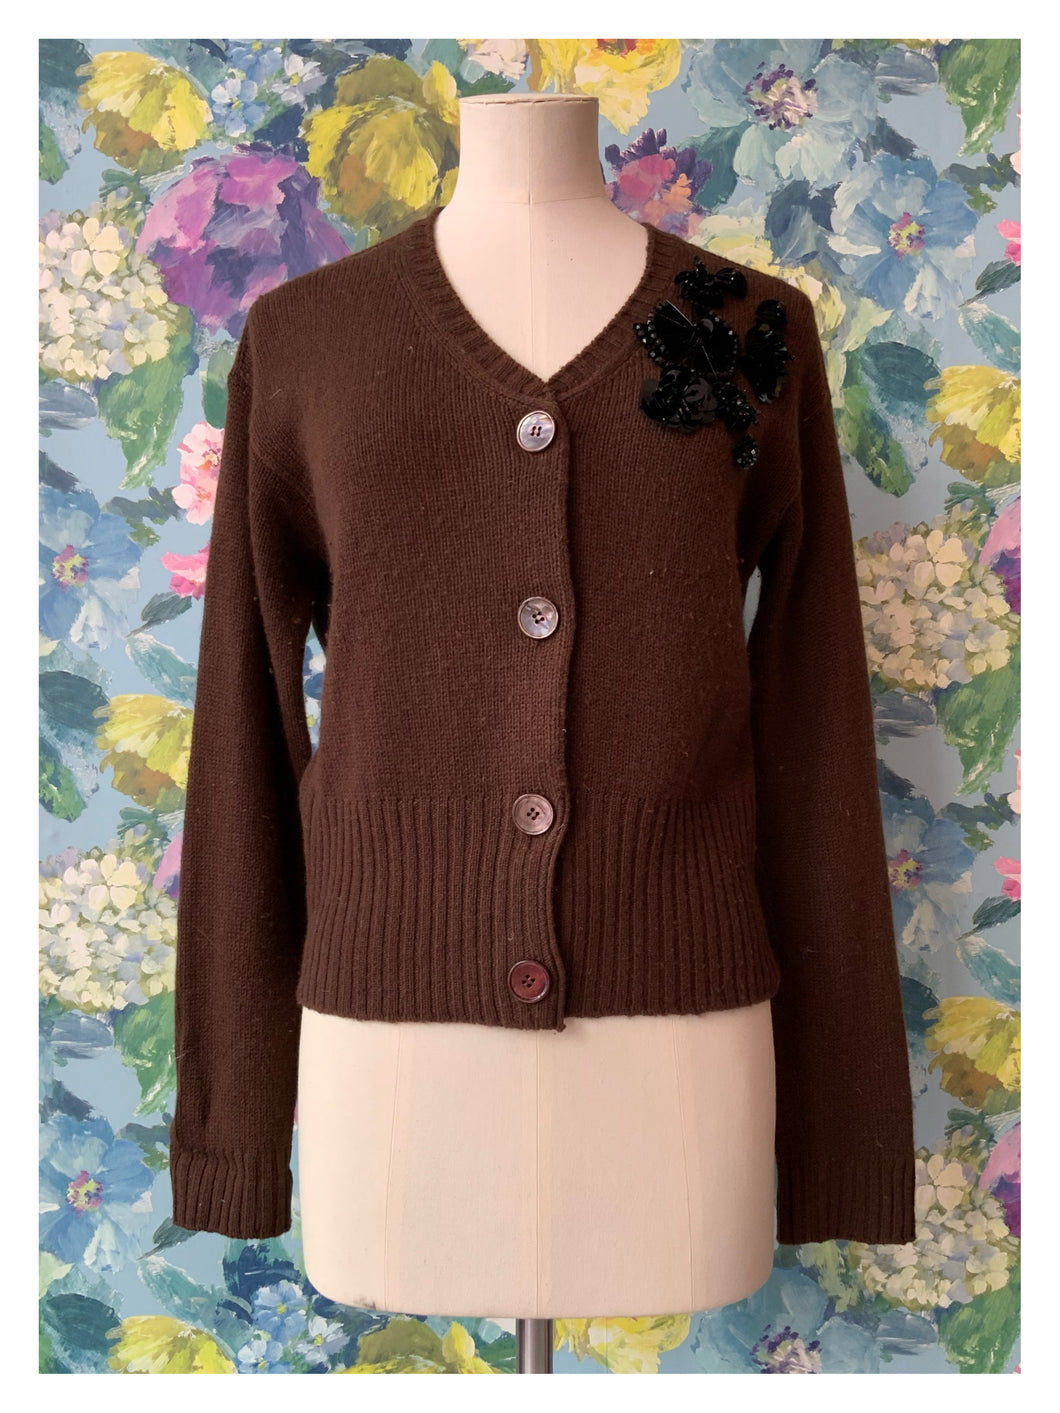 Prada Mocha Knit Cardigan w/ Sequin Embellishments from Dress, in Bridport